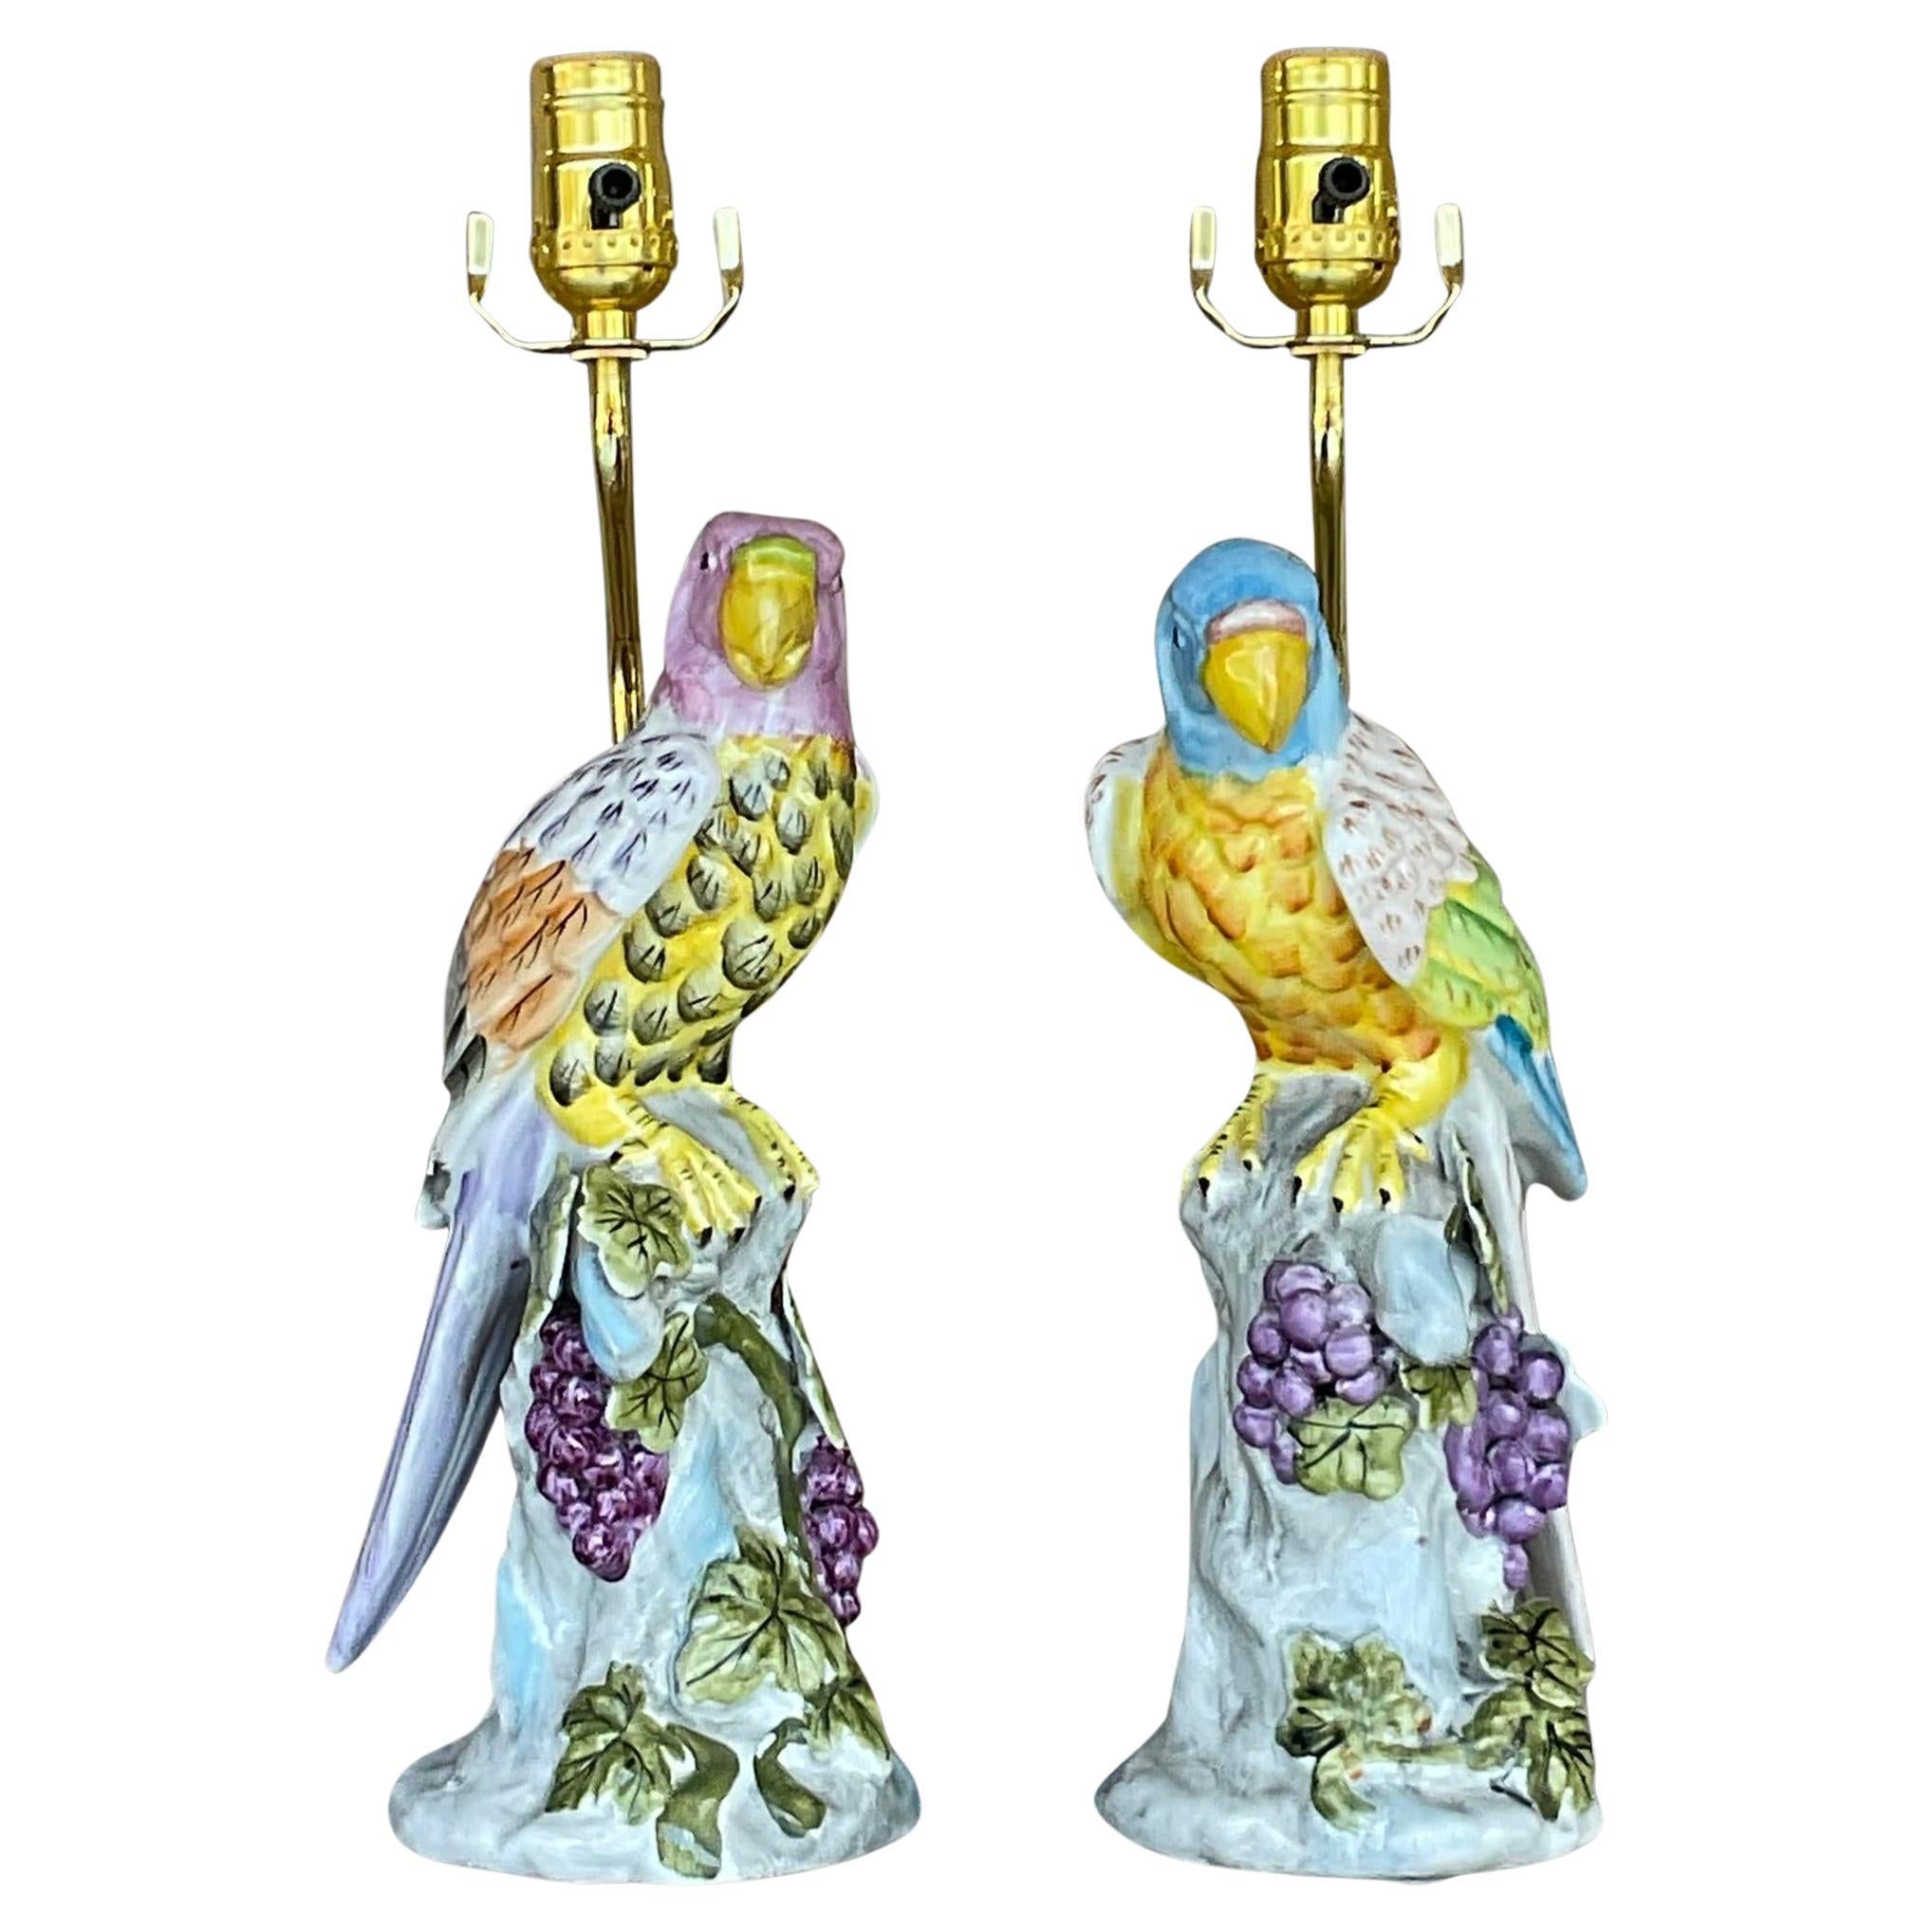 Vintage Regency Glazed Ceramic Parrot Lamps - a Pair For Sale